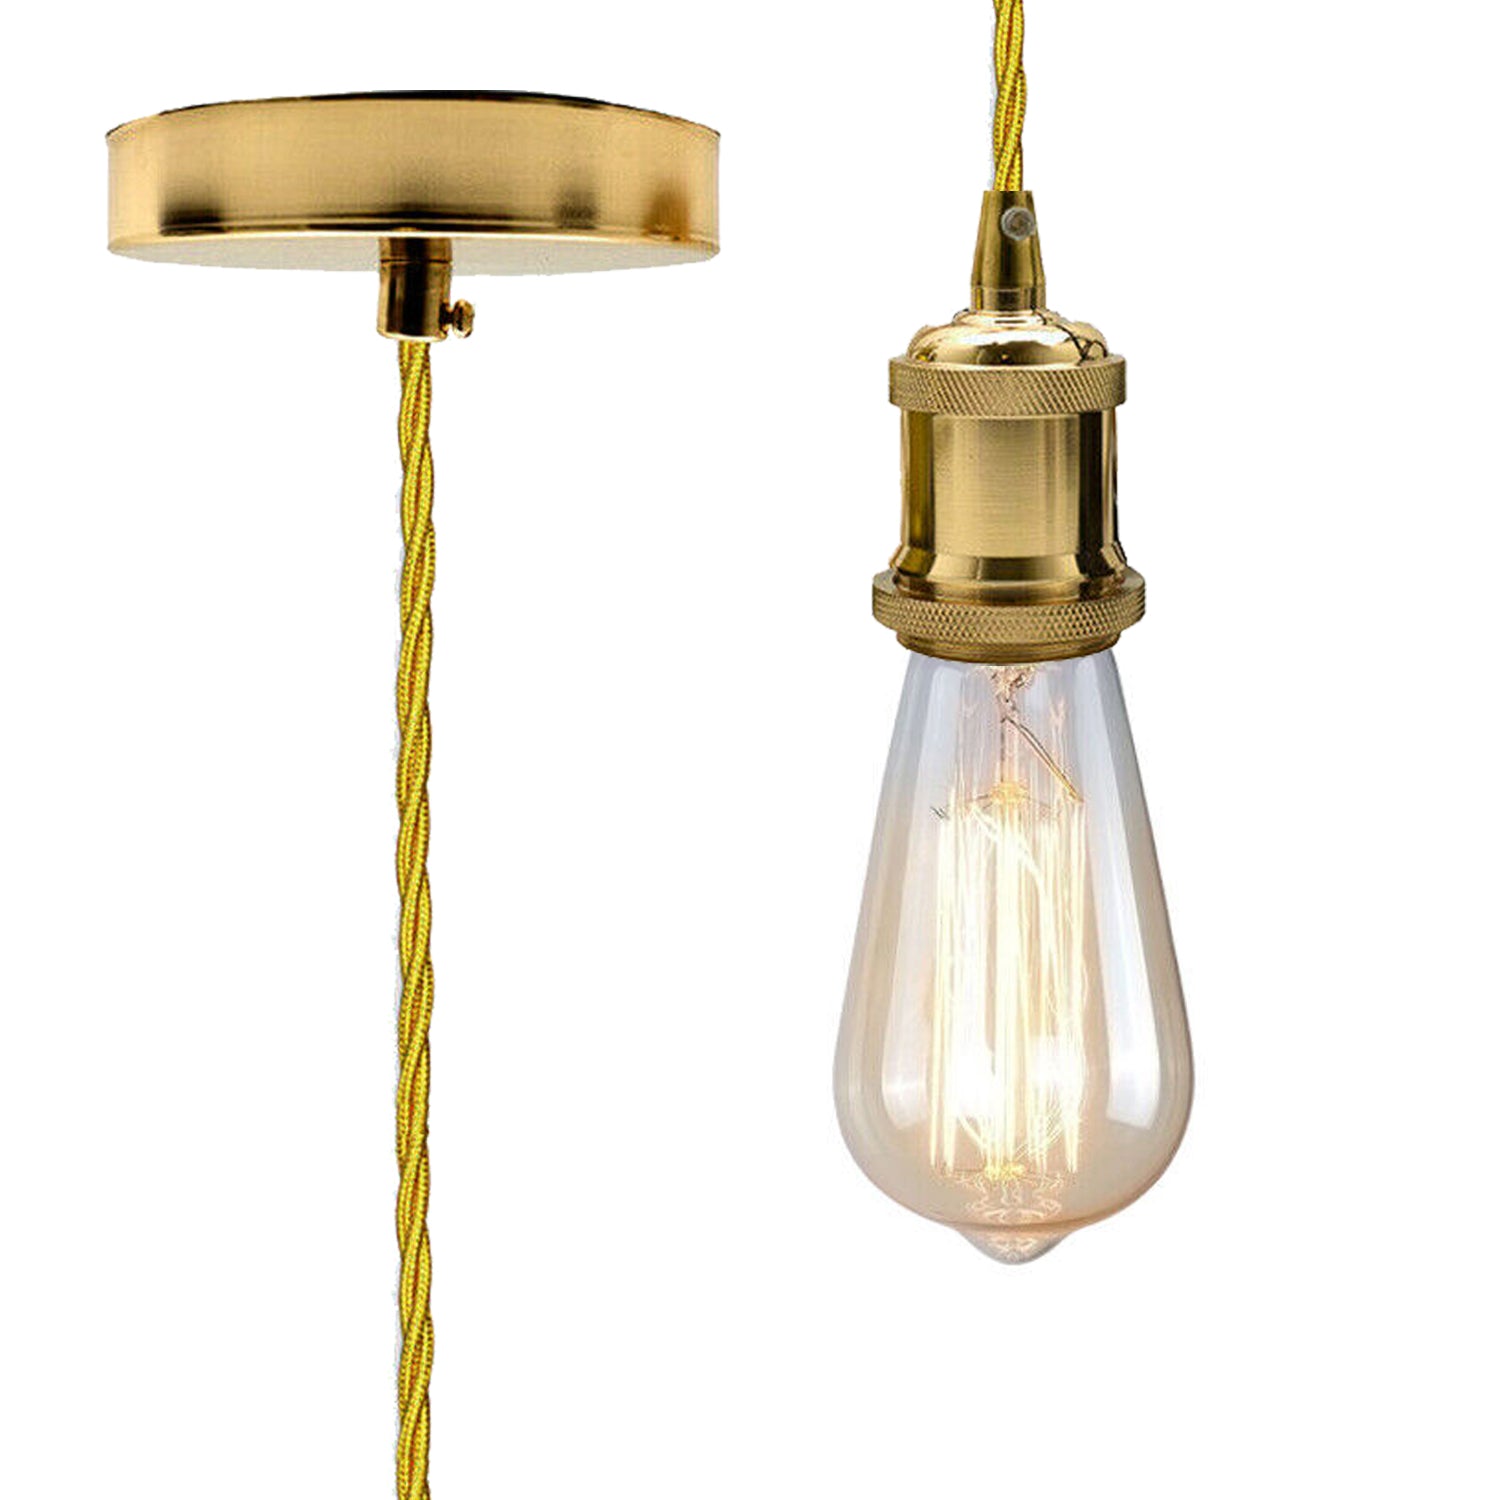 French Gold Vintage Metal Ceiling Light Fitting Gold Twisted Braided Flex 2m E27 Lamp Holder Suspended Pendant Light Fitting Kit for Indoor Lightings